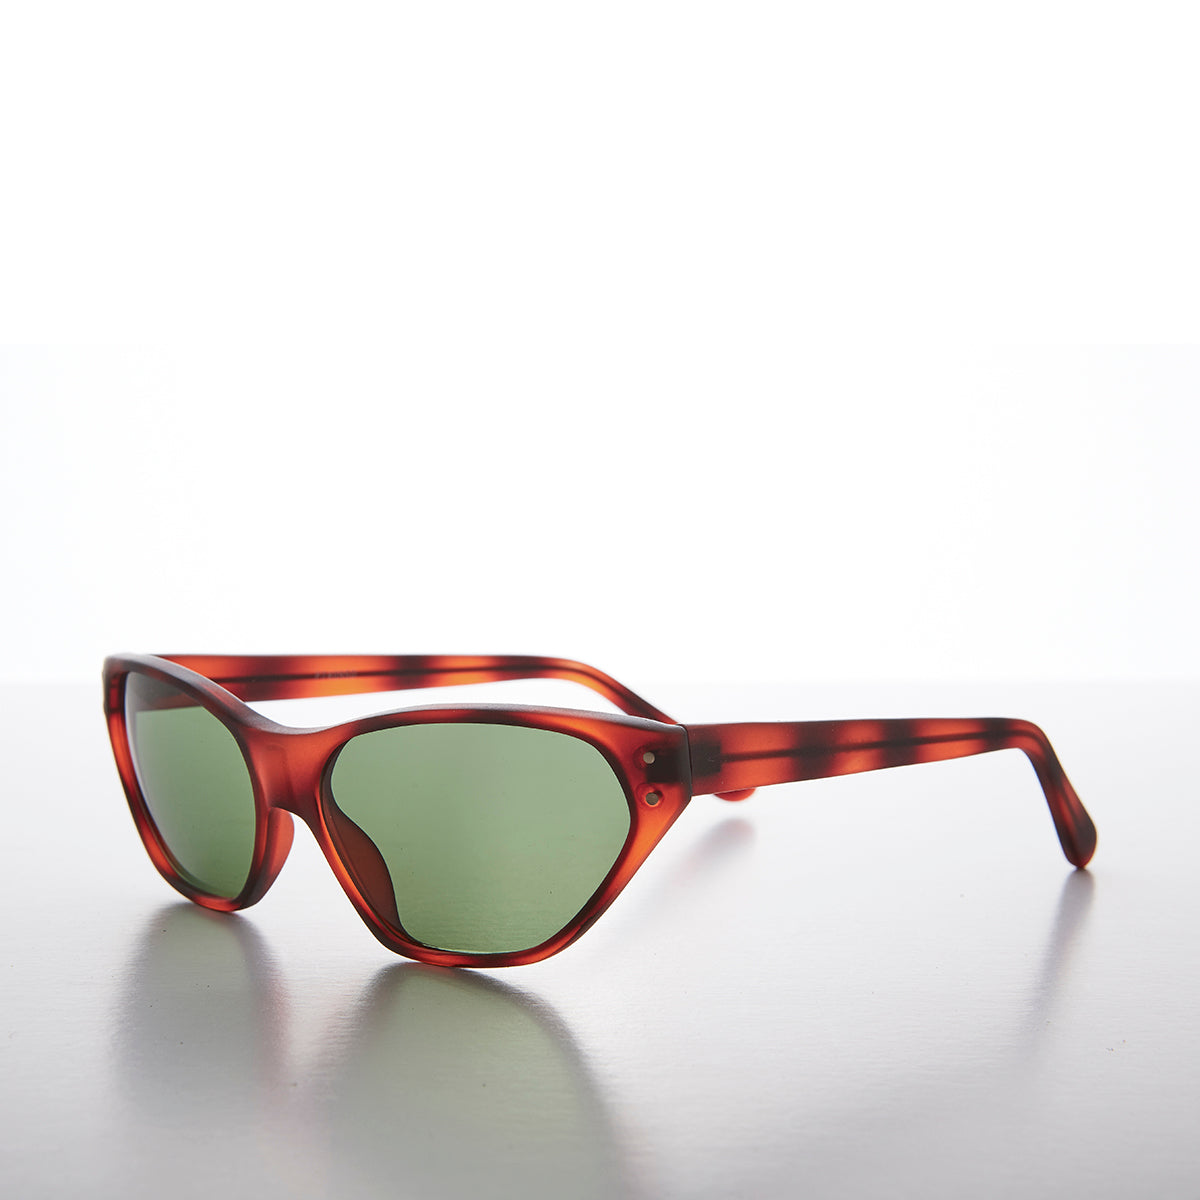 Narrow Edgy 90s Rocker Cat Eye Vintage Sunglasses 